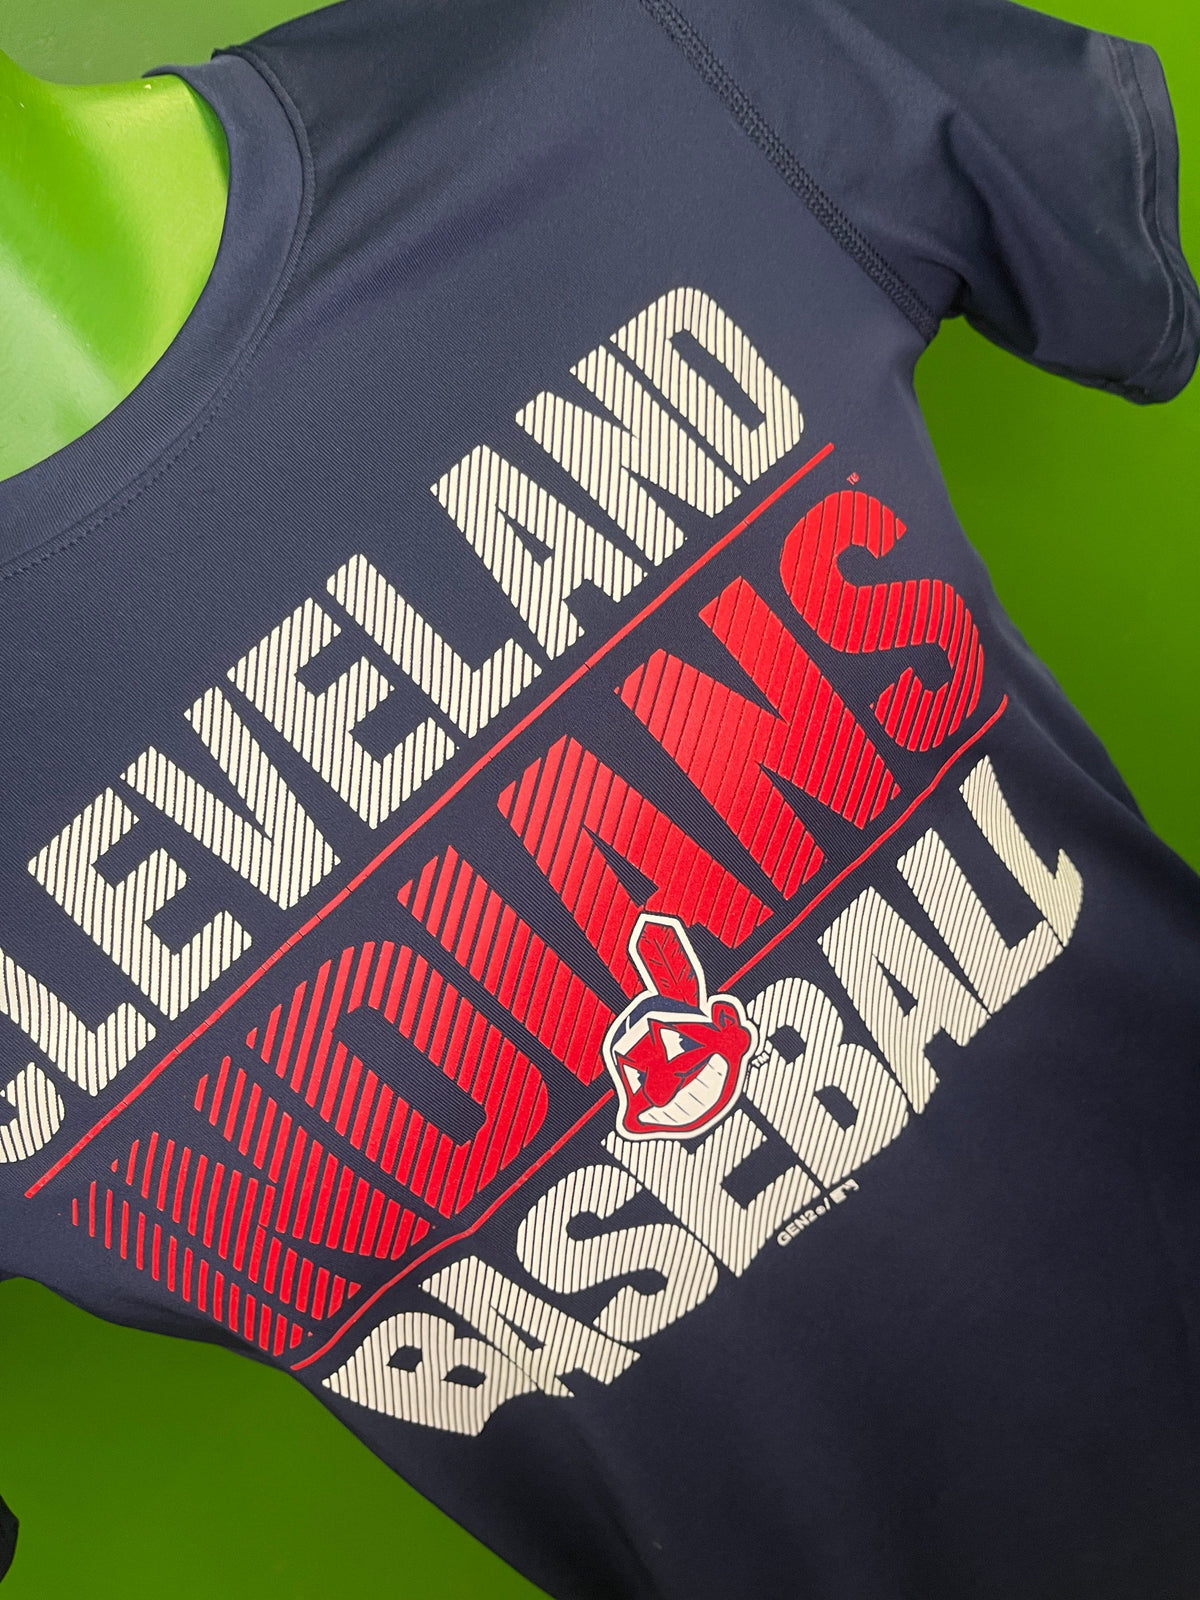 MLB Cleveland Indians Gen2 Wicking-Style T-Shirt Youth Medium